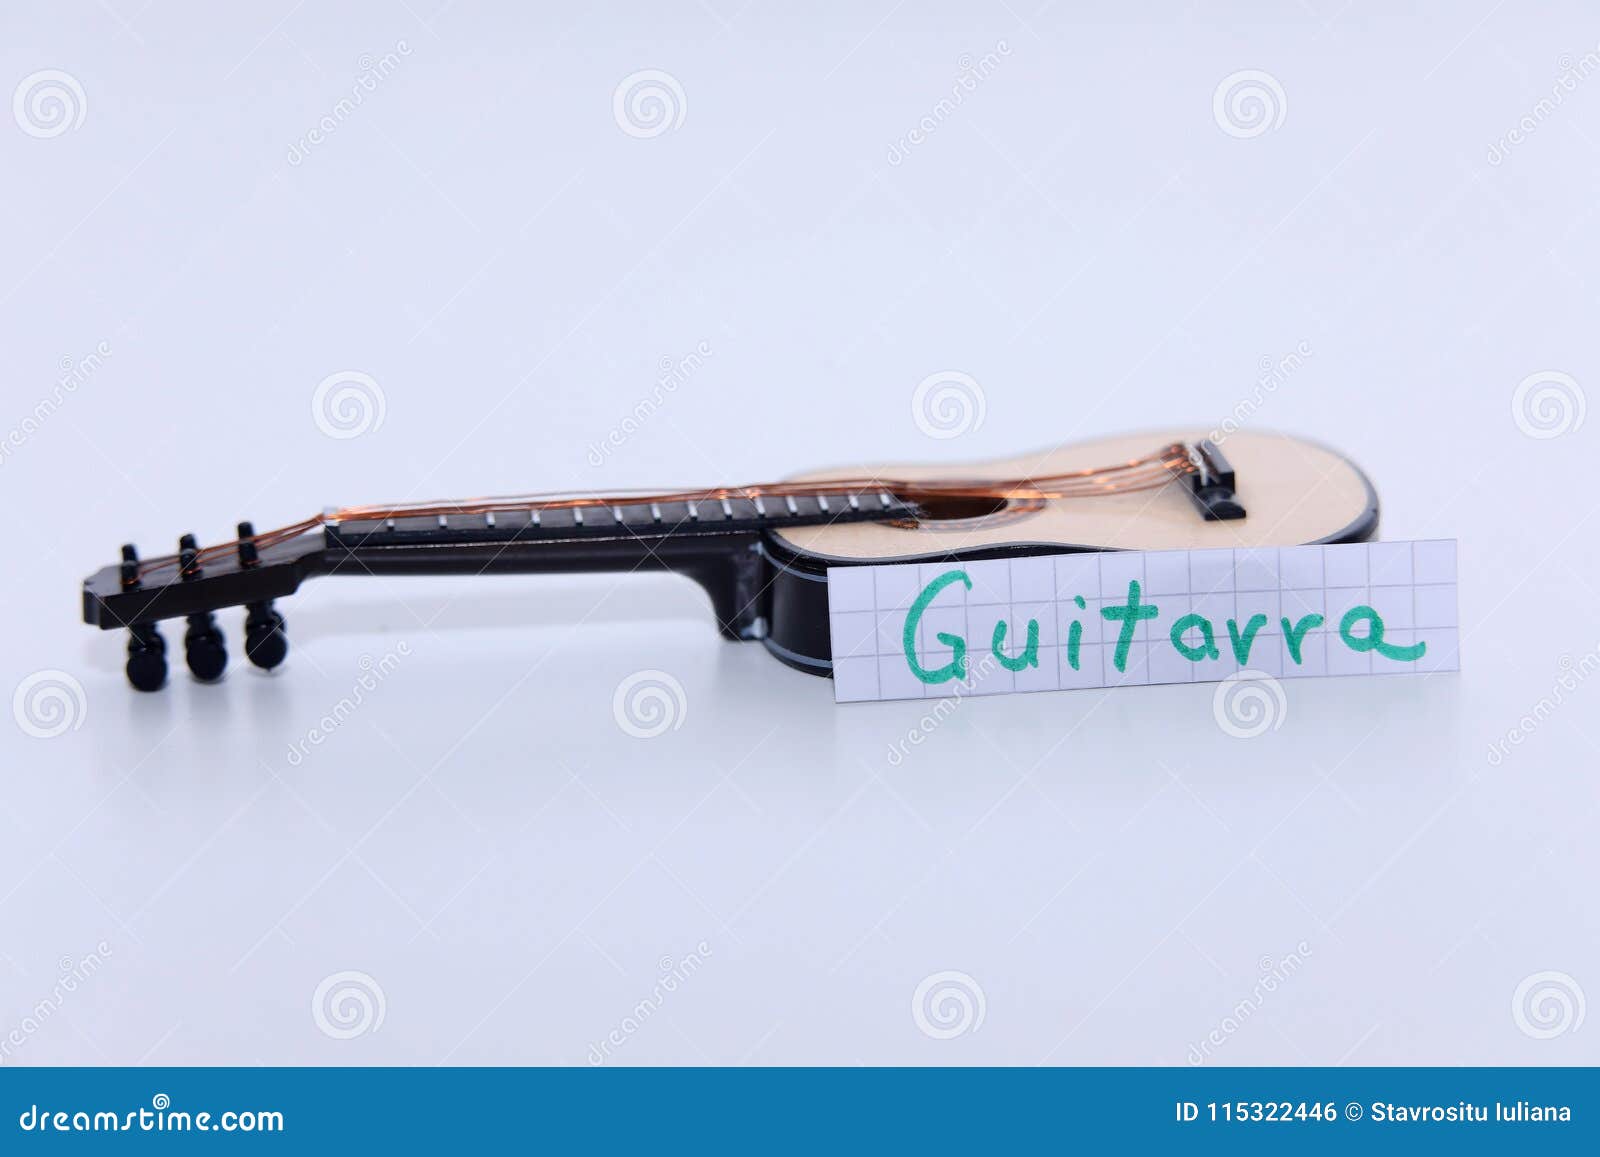 guitarra, spanish word for guitar in english